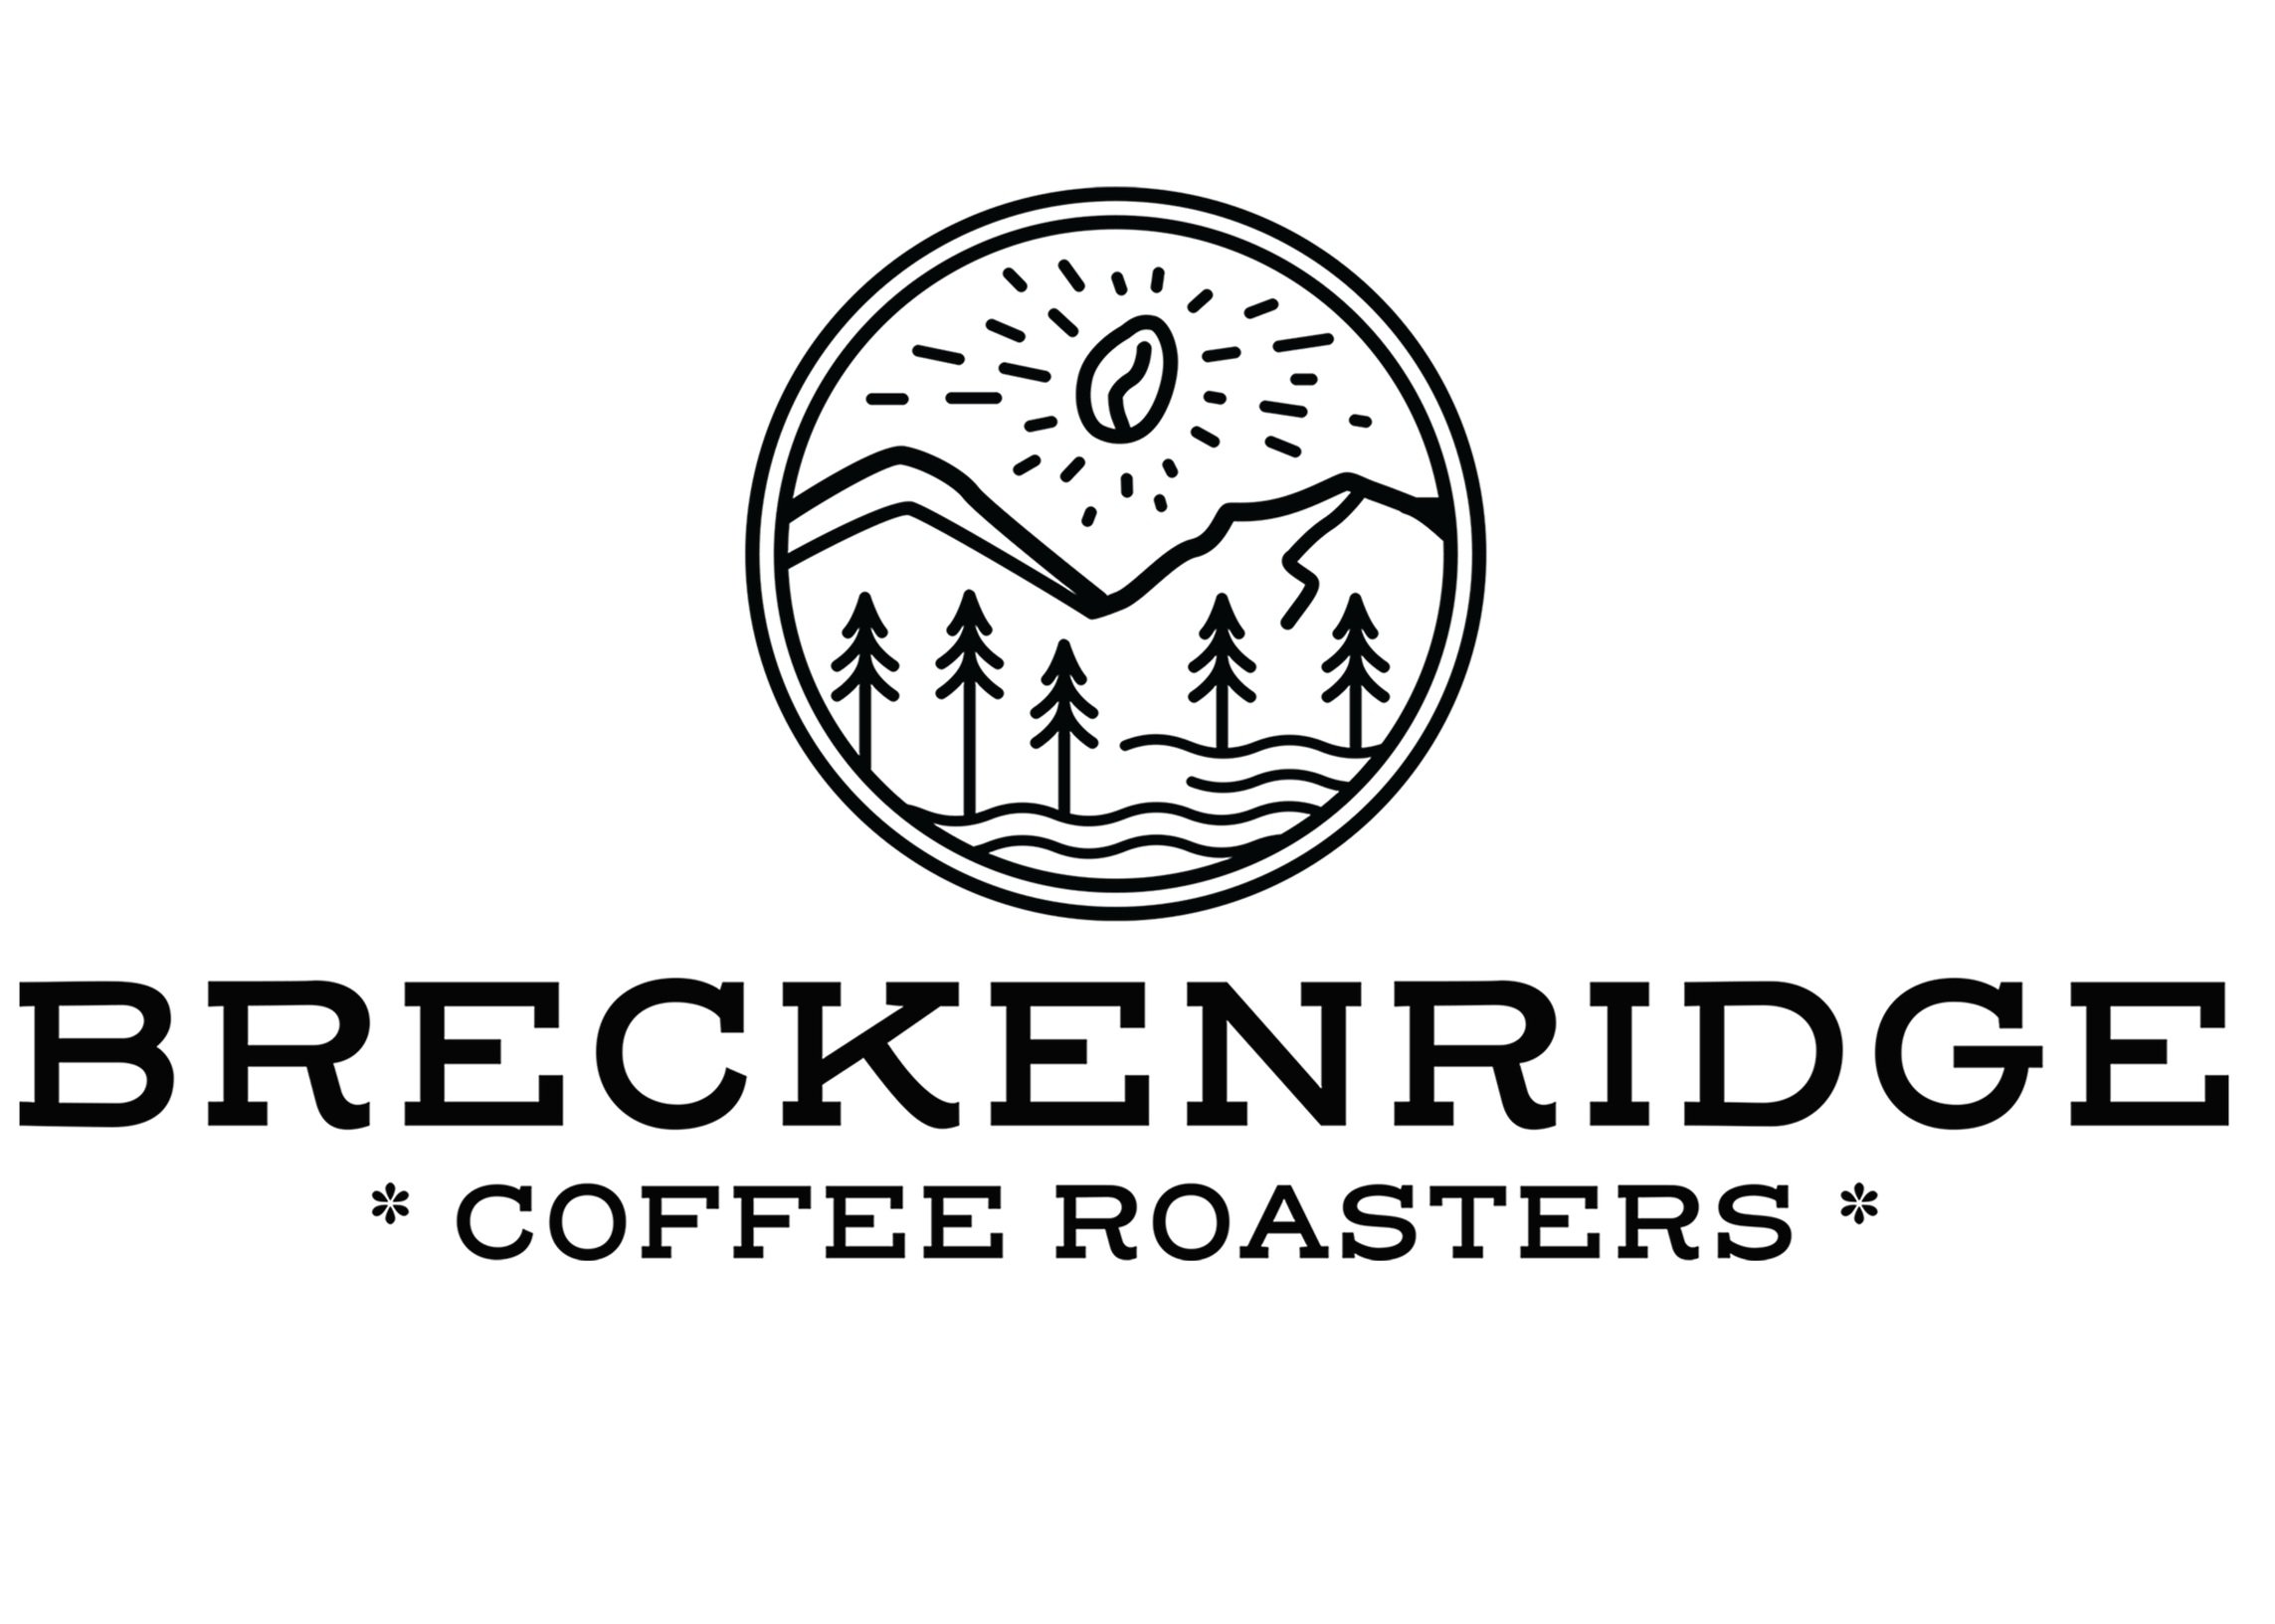 Breckenridge Coffee Roasters